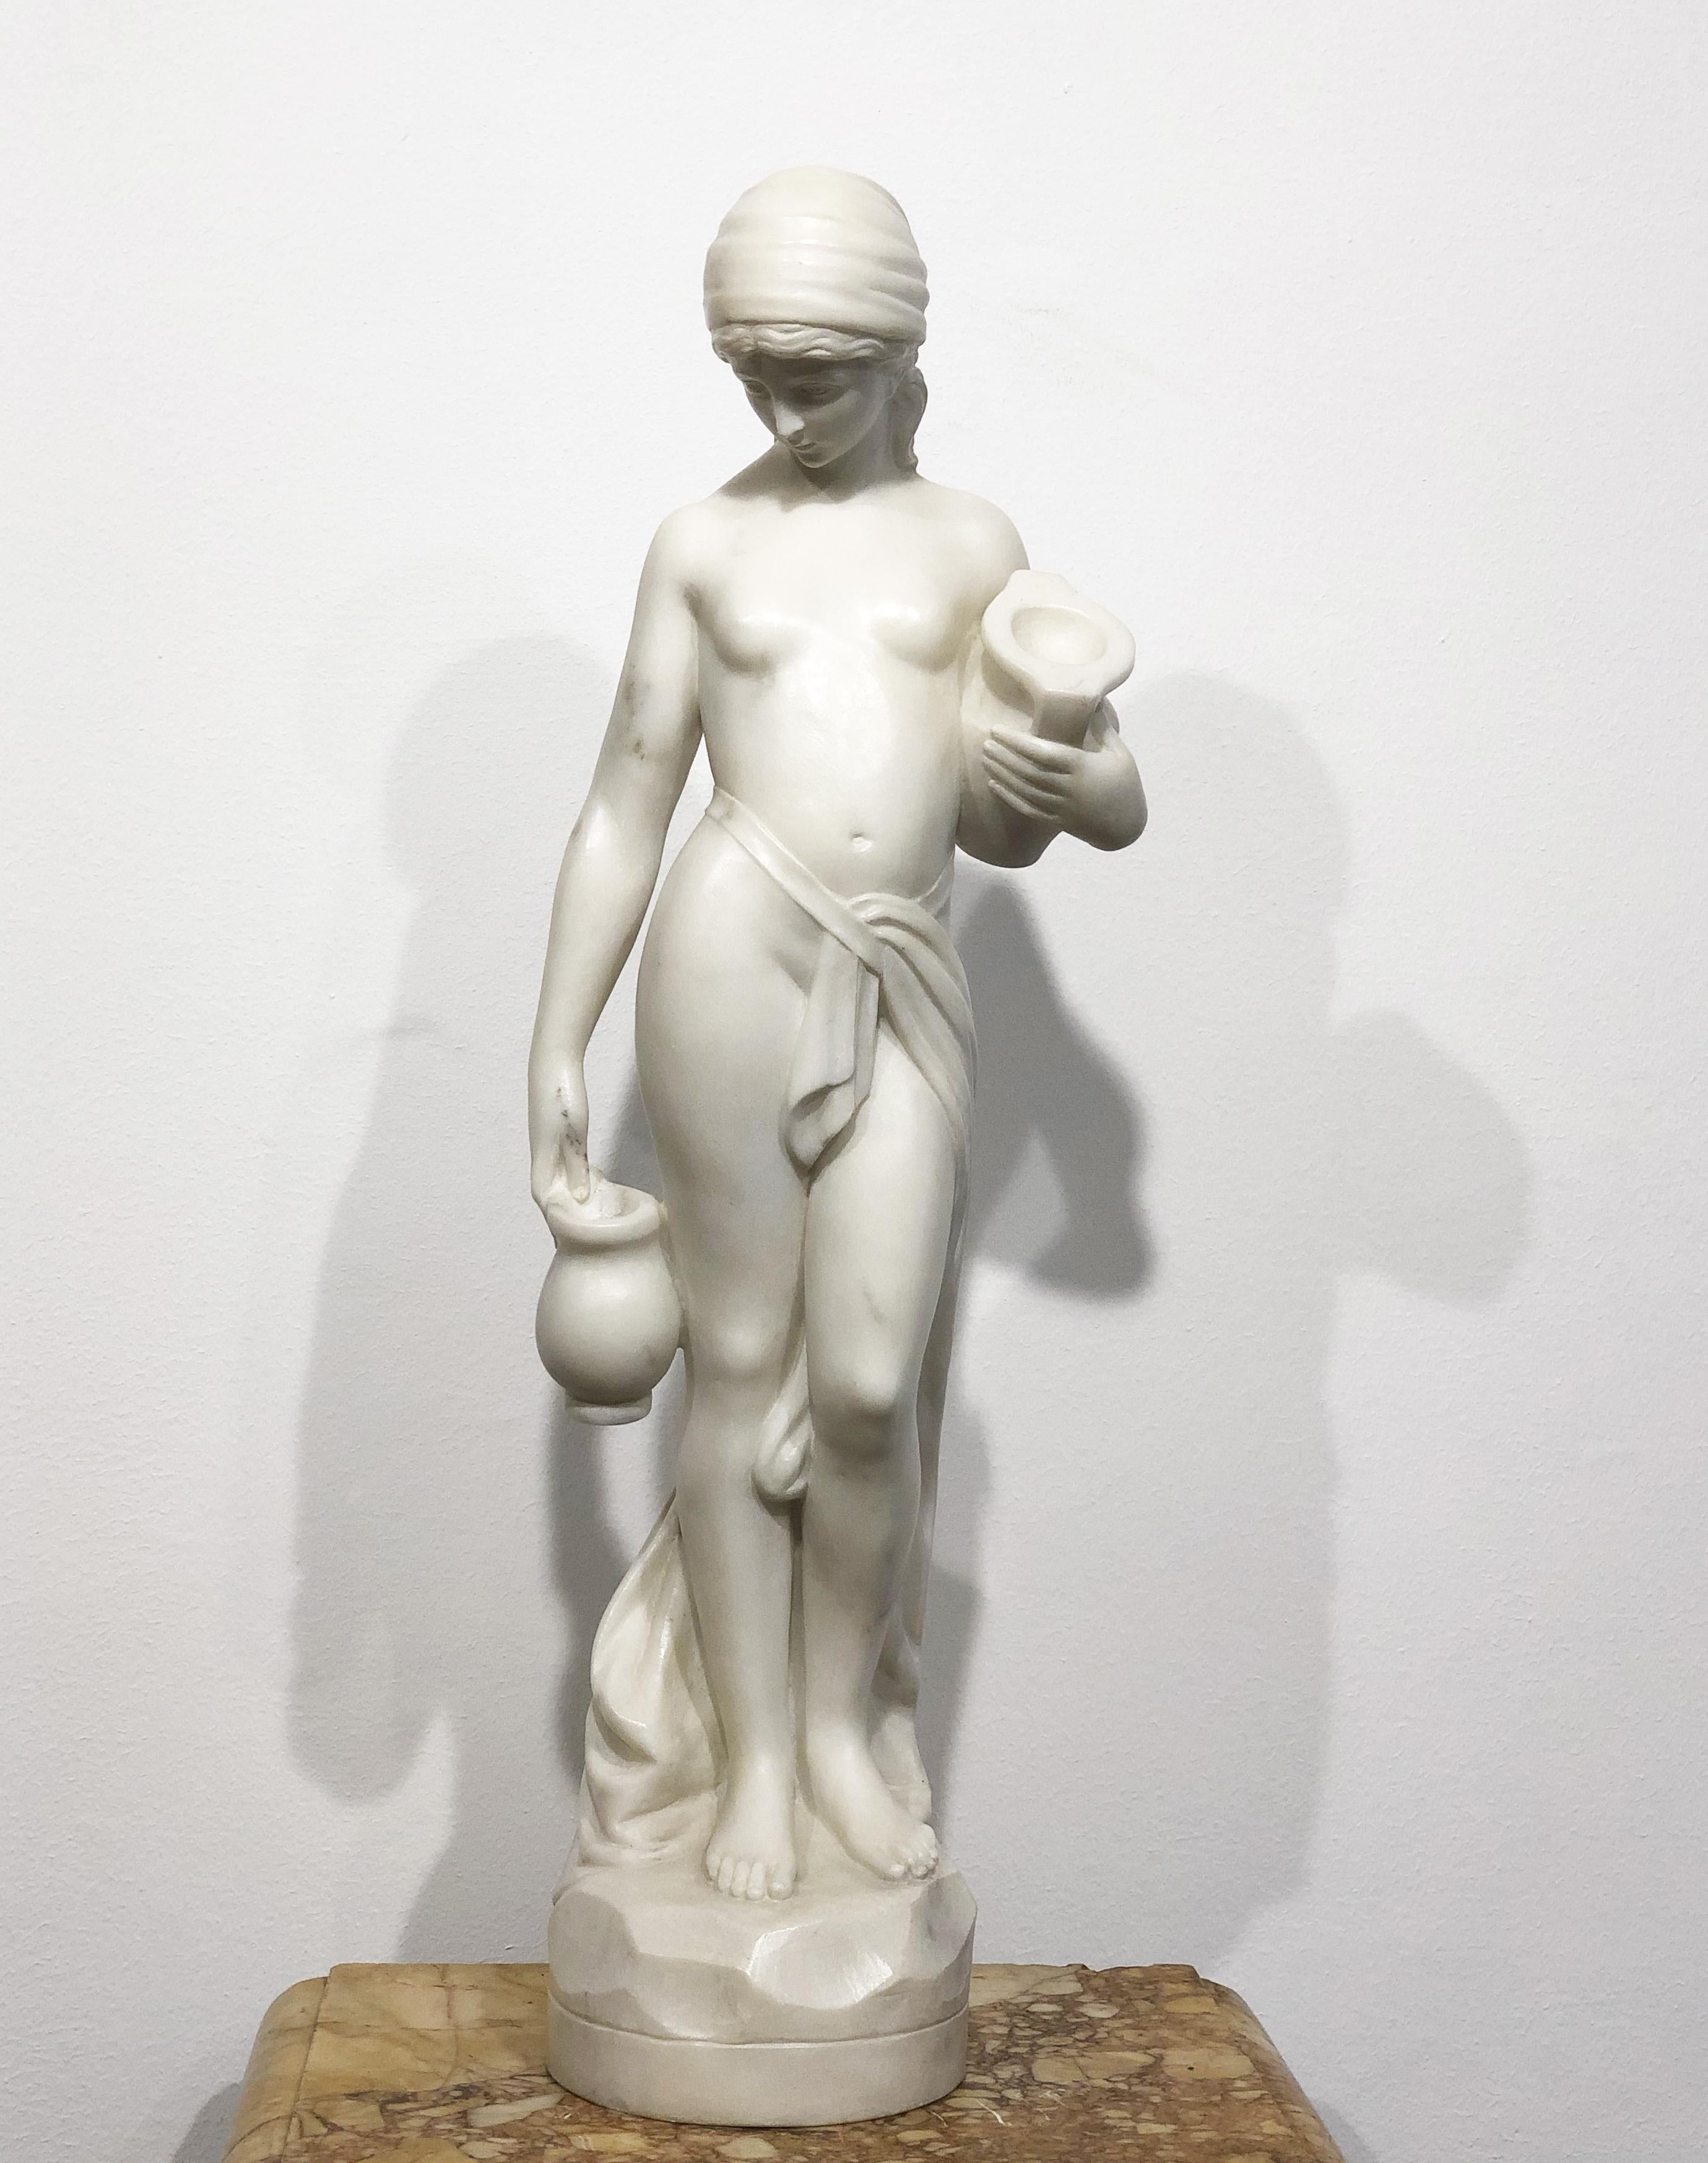 sweet dreams marble sculpture 1892 by antonio frilli